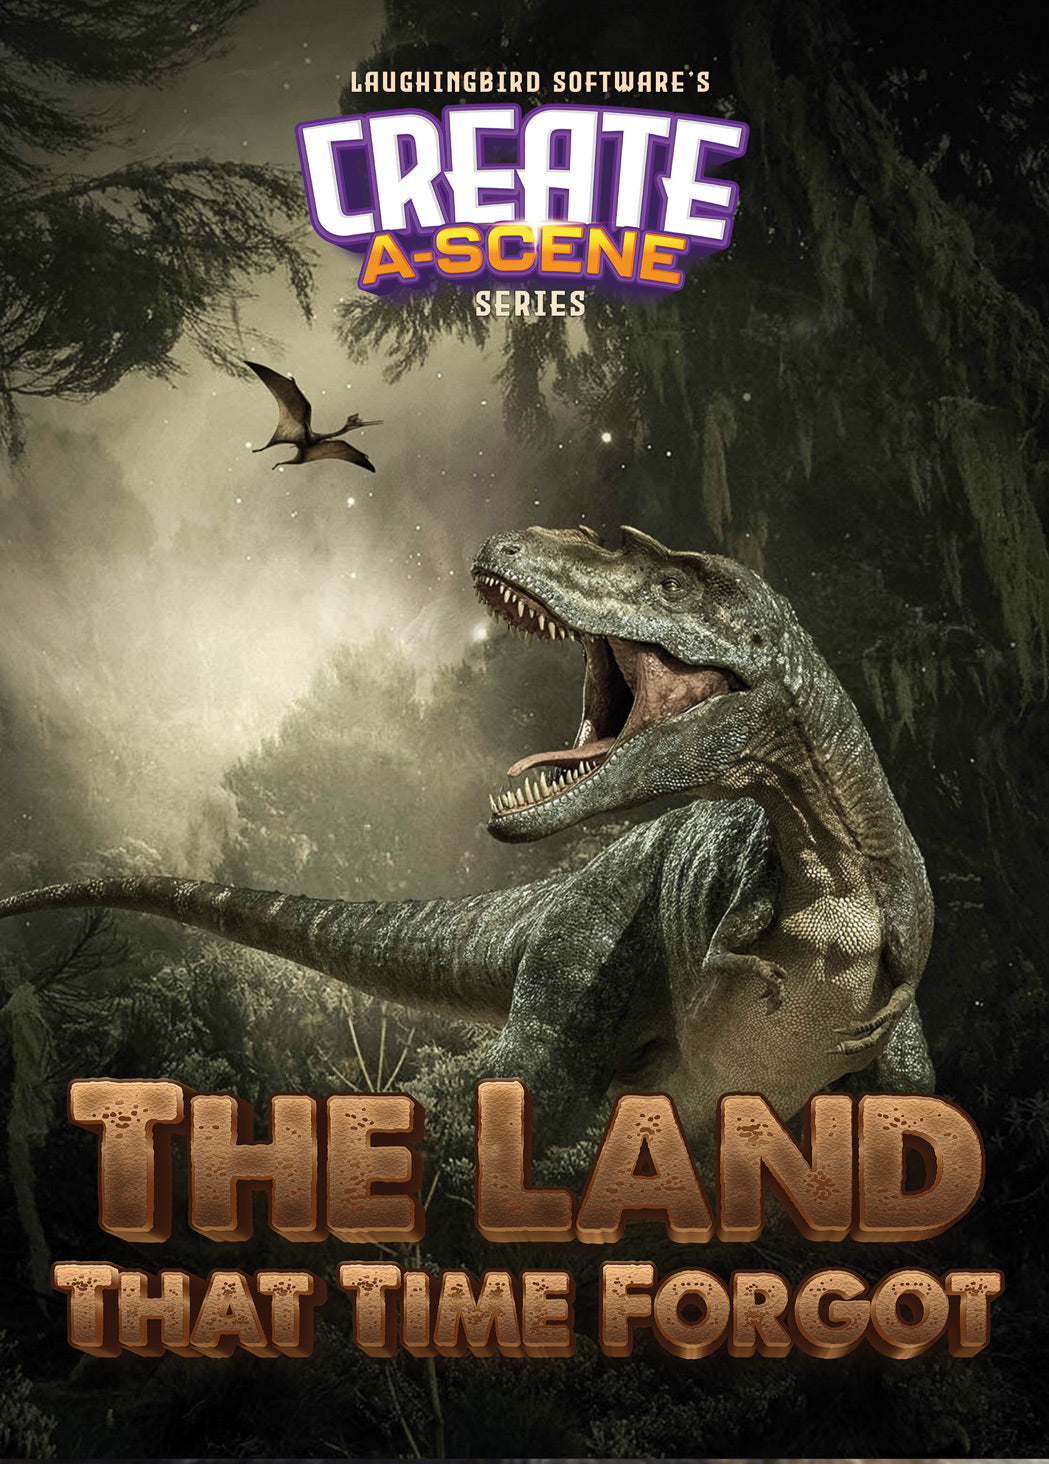 Laughingbird Create A Scene Bundle: Ocean Planet, Wild West, Prehistoric